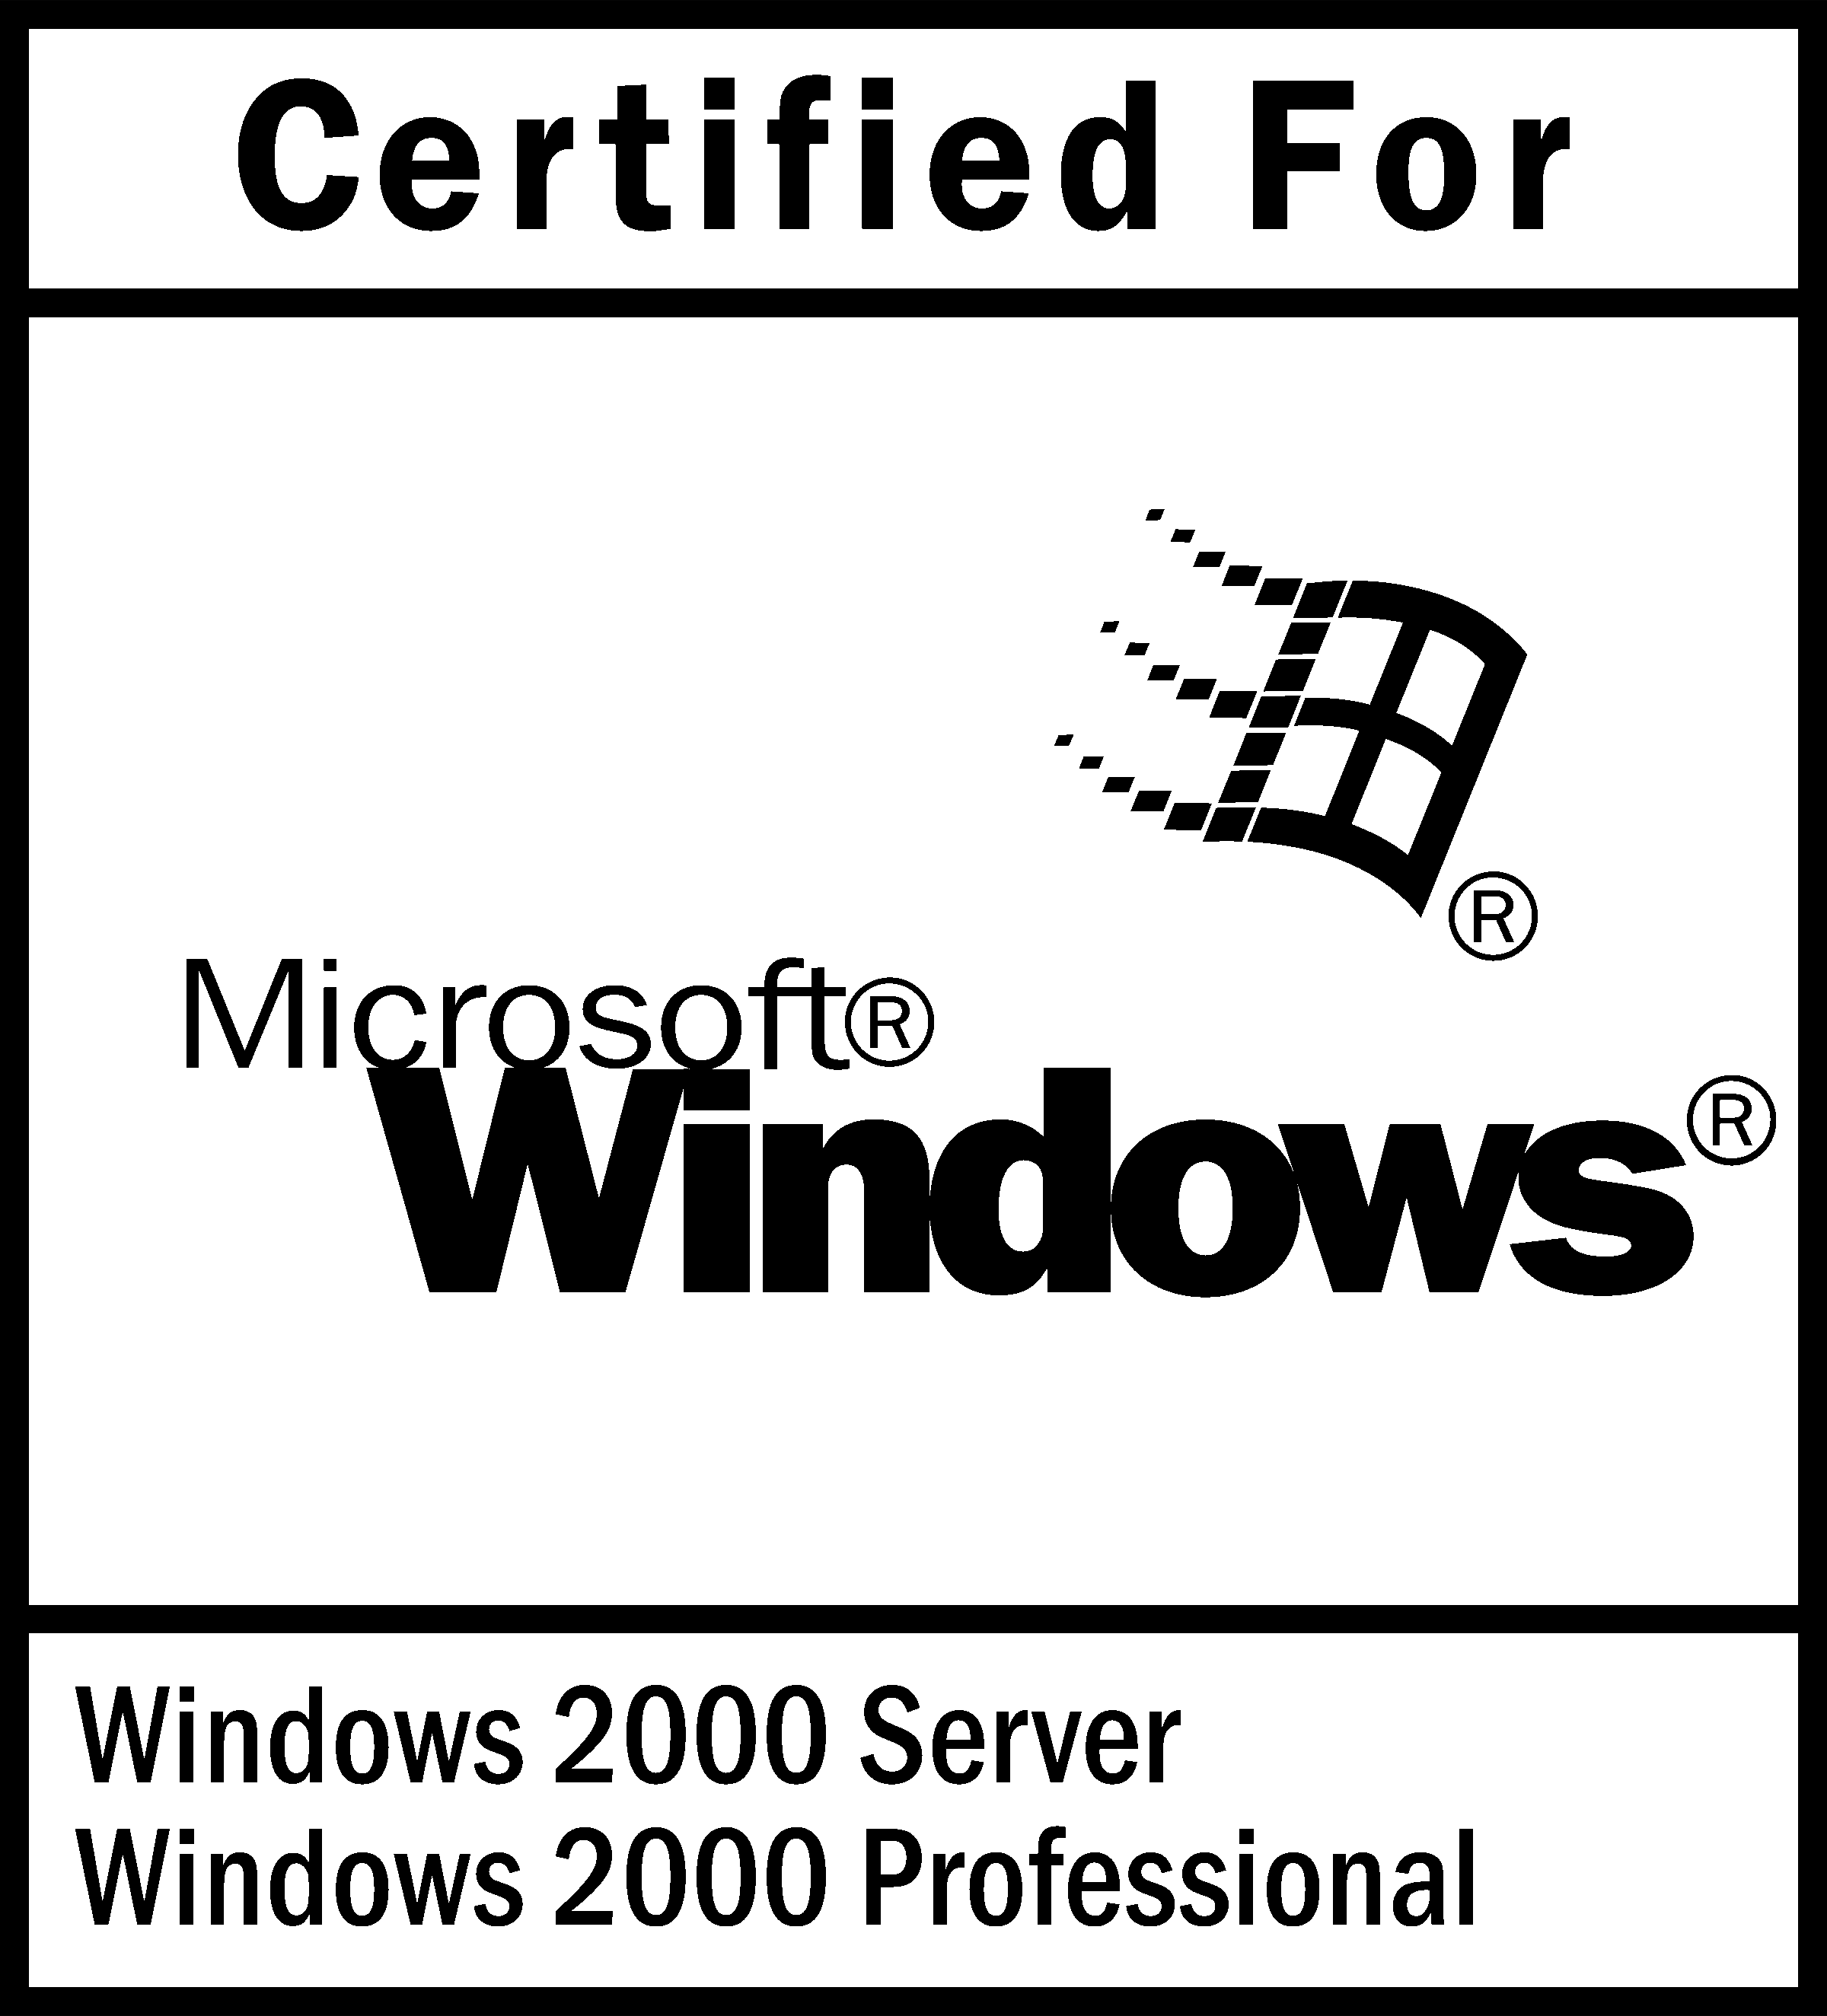 Microsoft Windows 2000 Logo - Microsoft Windows 2000 Logo PNG Transparent & SVG Vector - Freebie ...